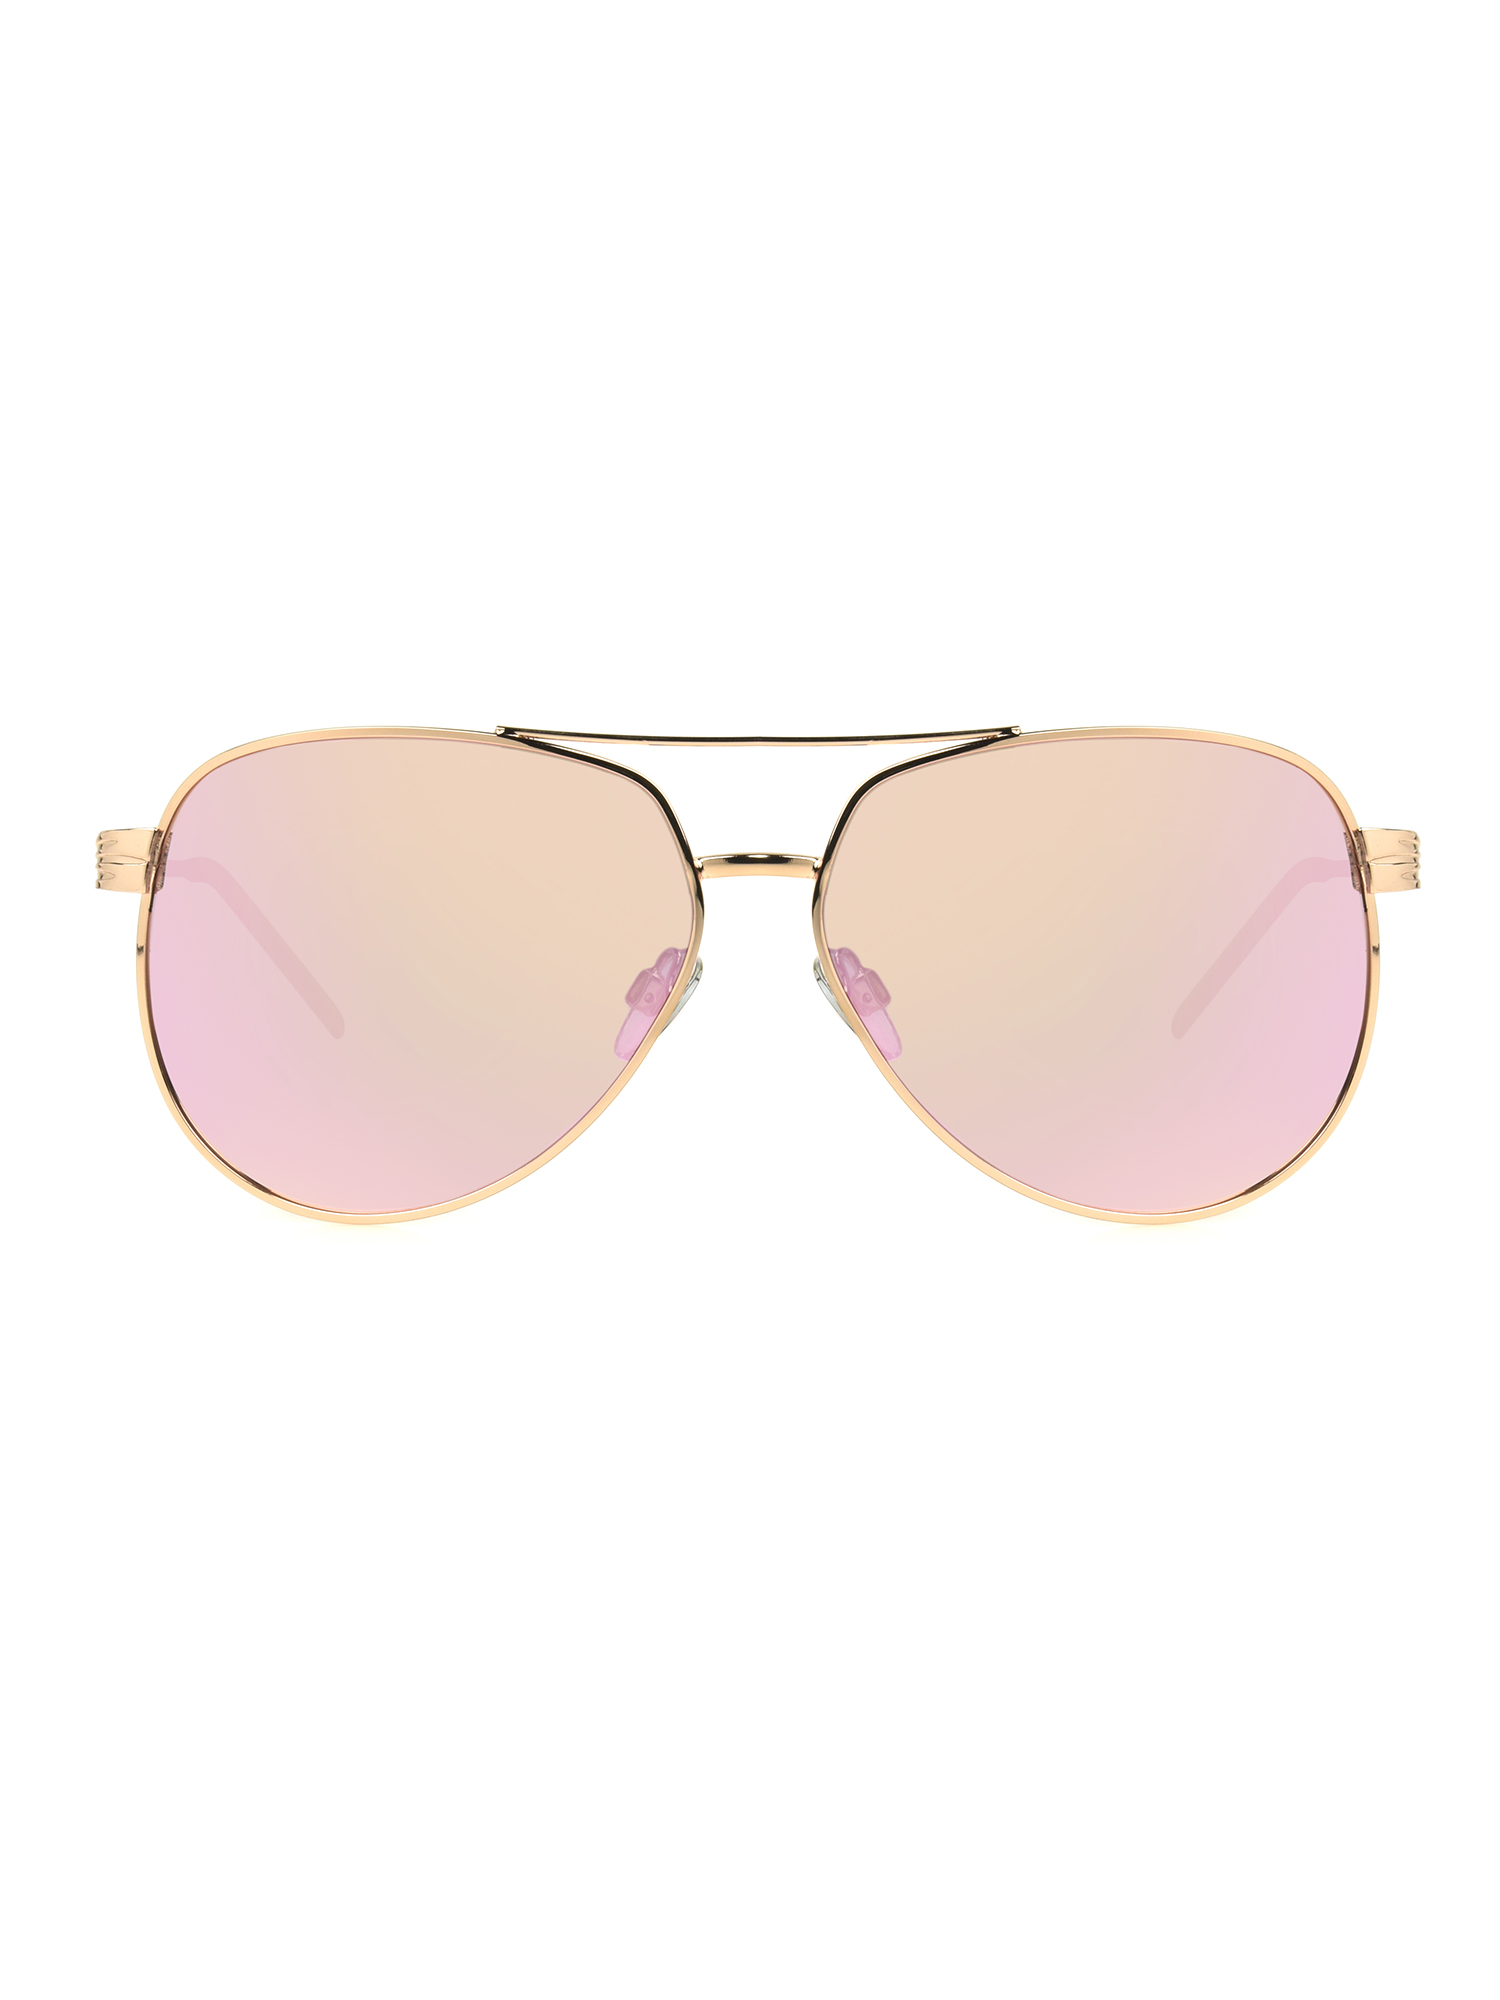 Foster Grant Women's Aviator Fashion Sunglasses Rose Gold - image 1 of 6